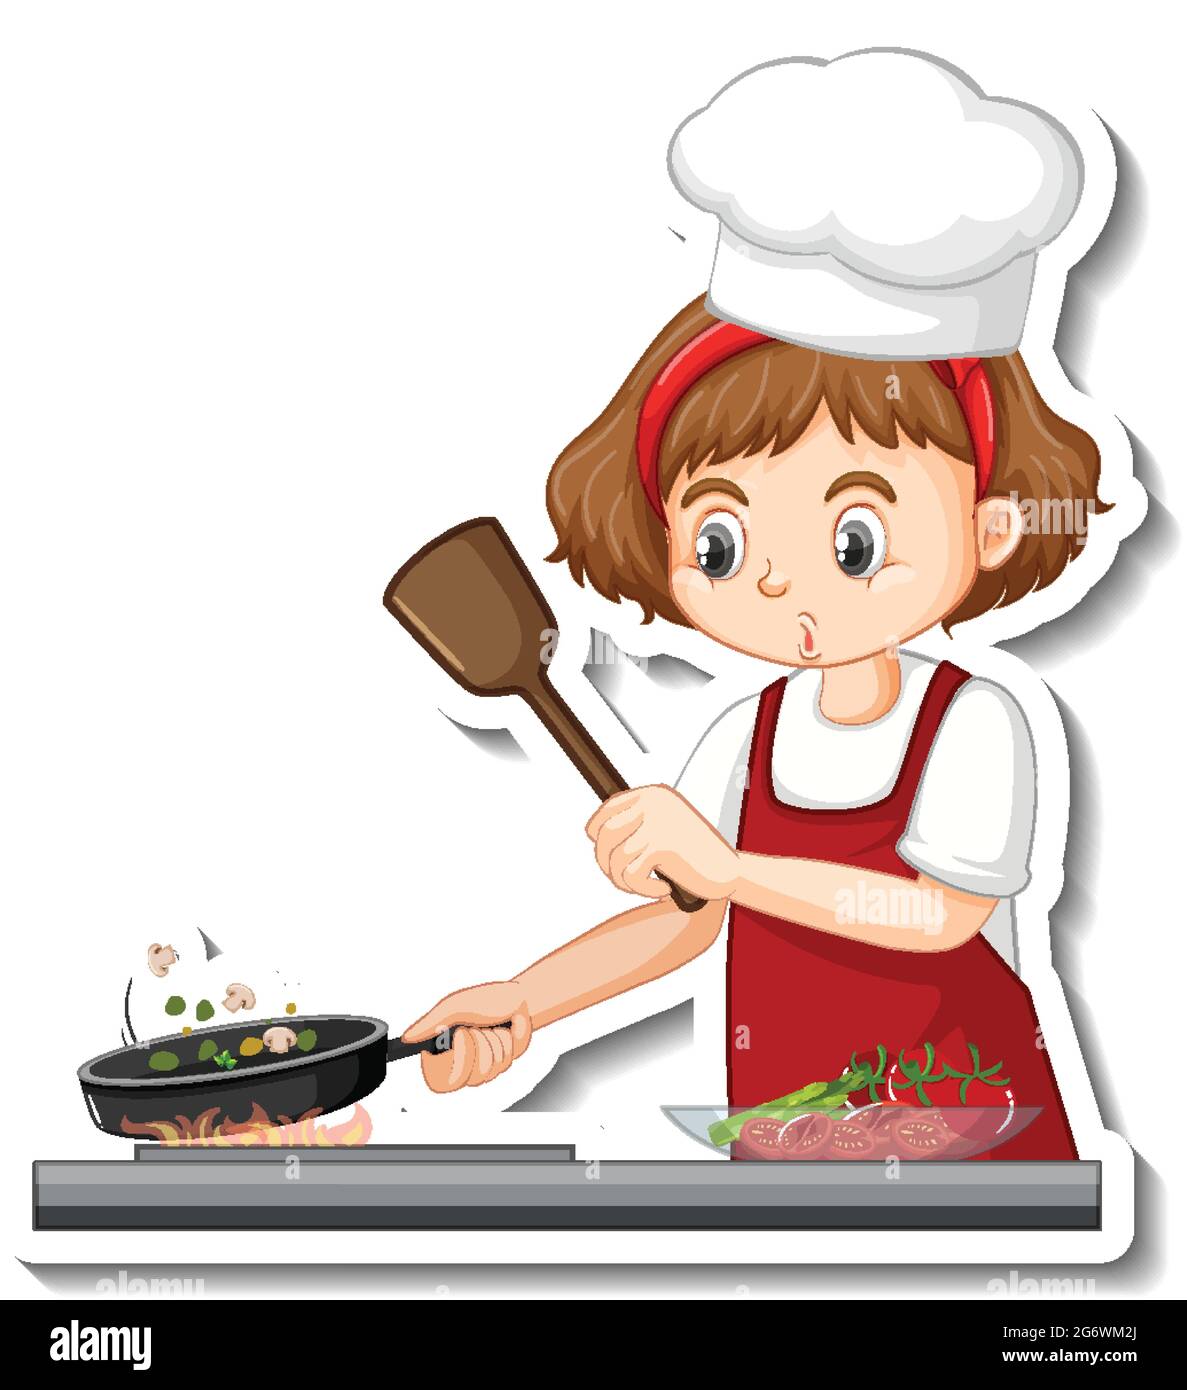 Sticker-Design mit Koch Mädchen Kochen Lebensmittel Cartoon Figur  Illustration Stock-Vektorgrafik - Alamy